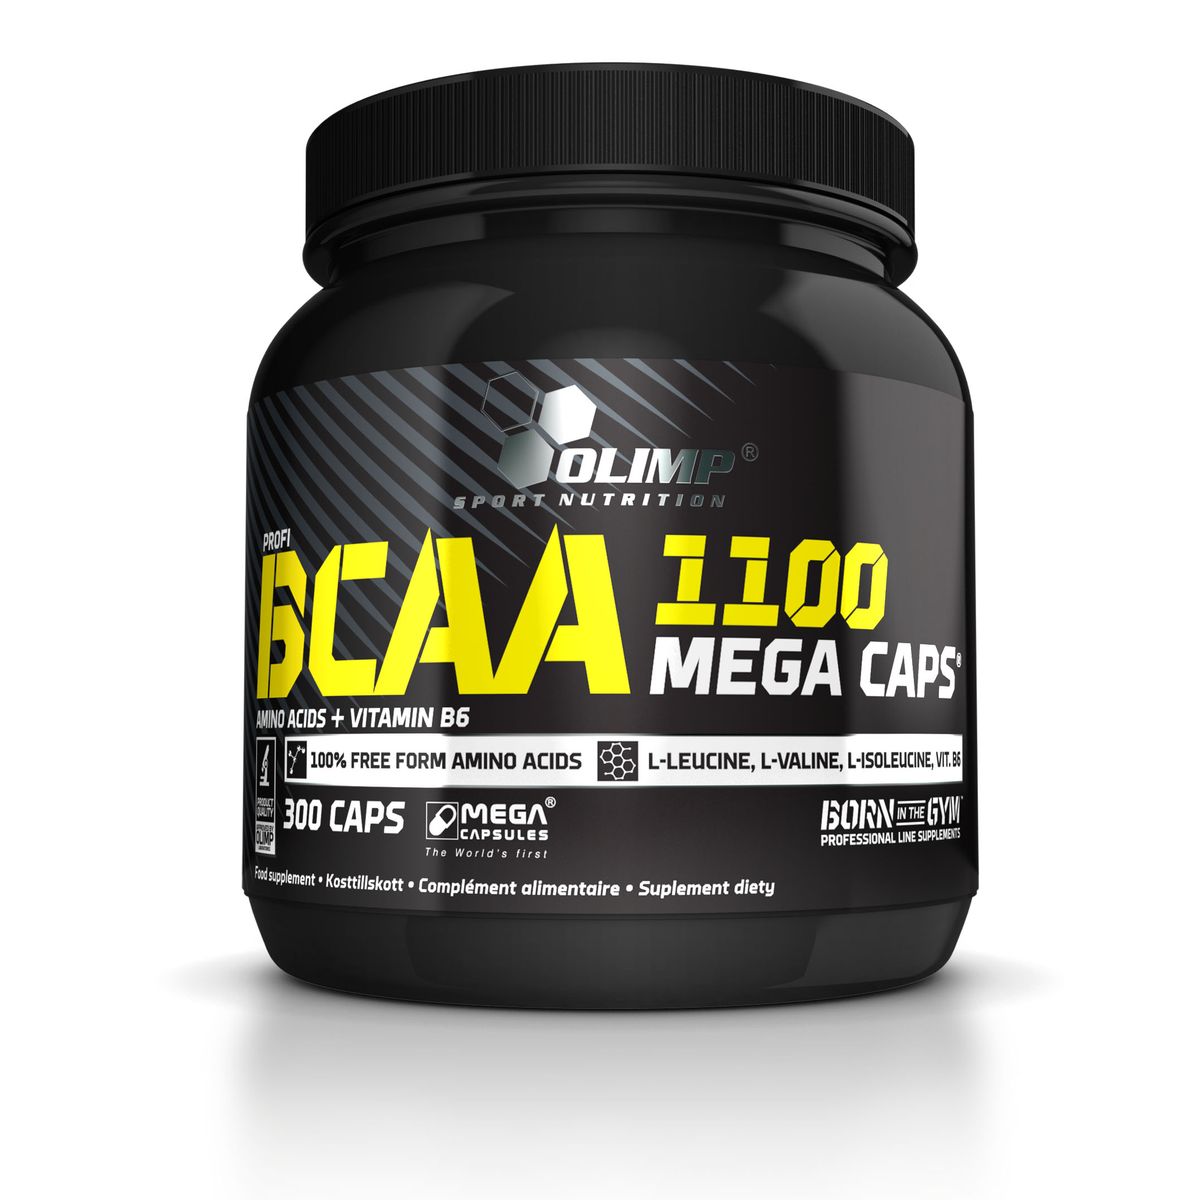 БЦАА Olimp Sport Nutrition BCAA 1100 Mega Caps, 300 капсул